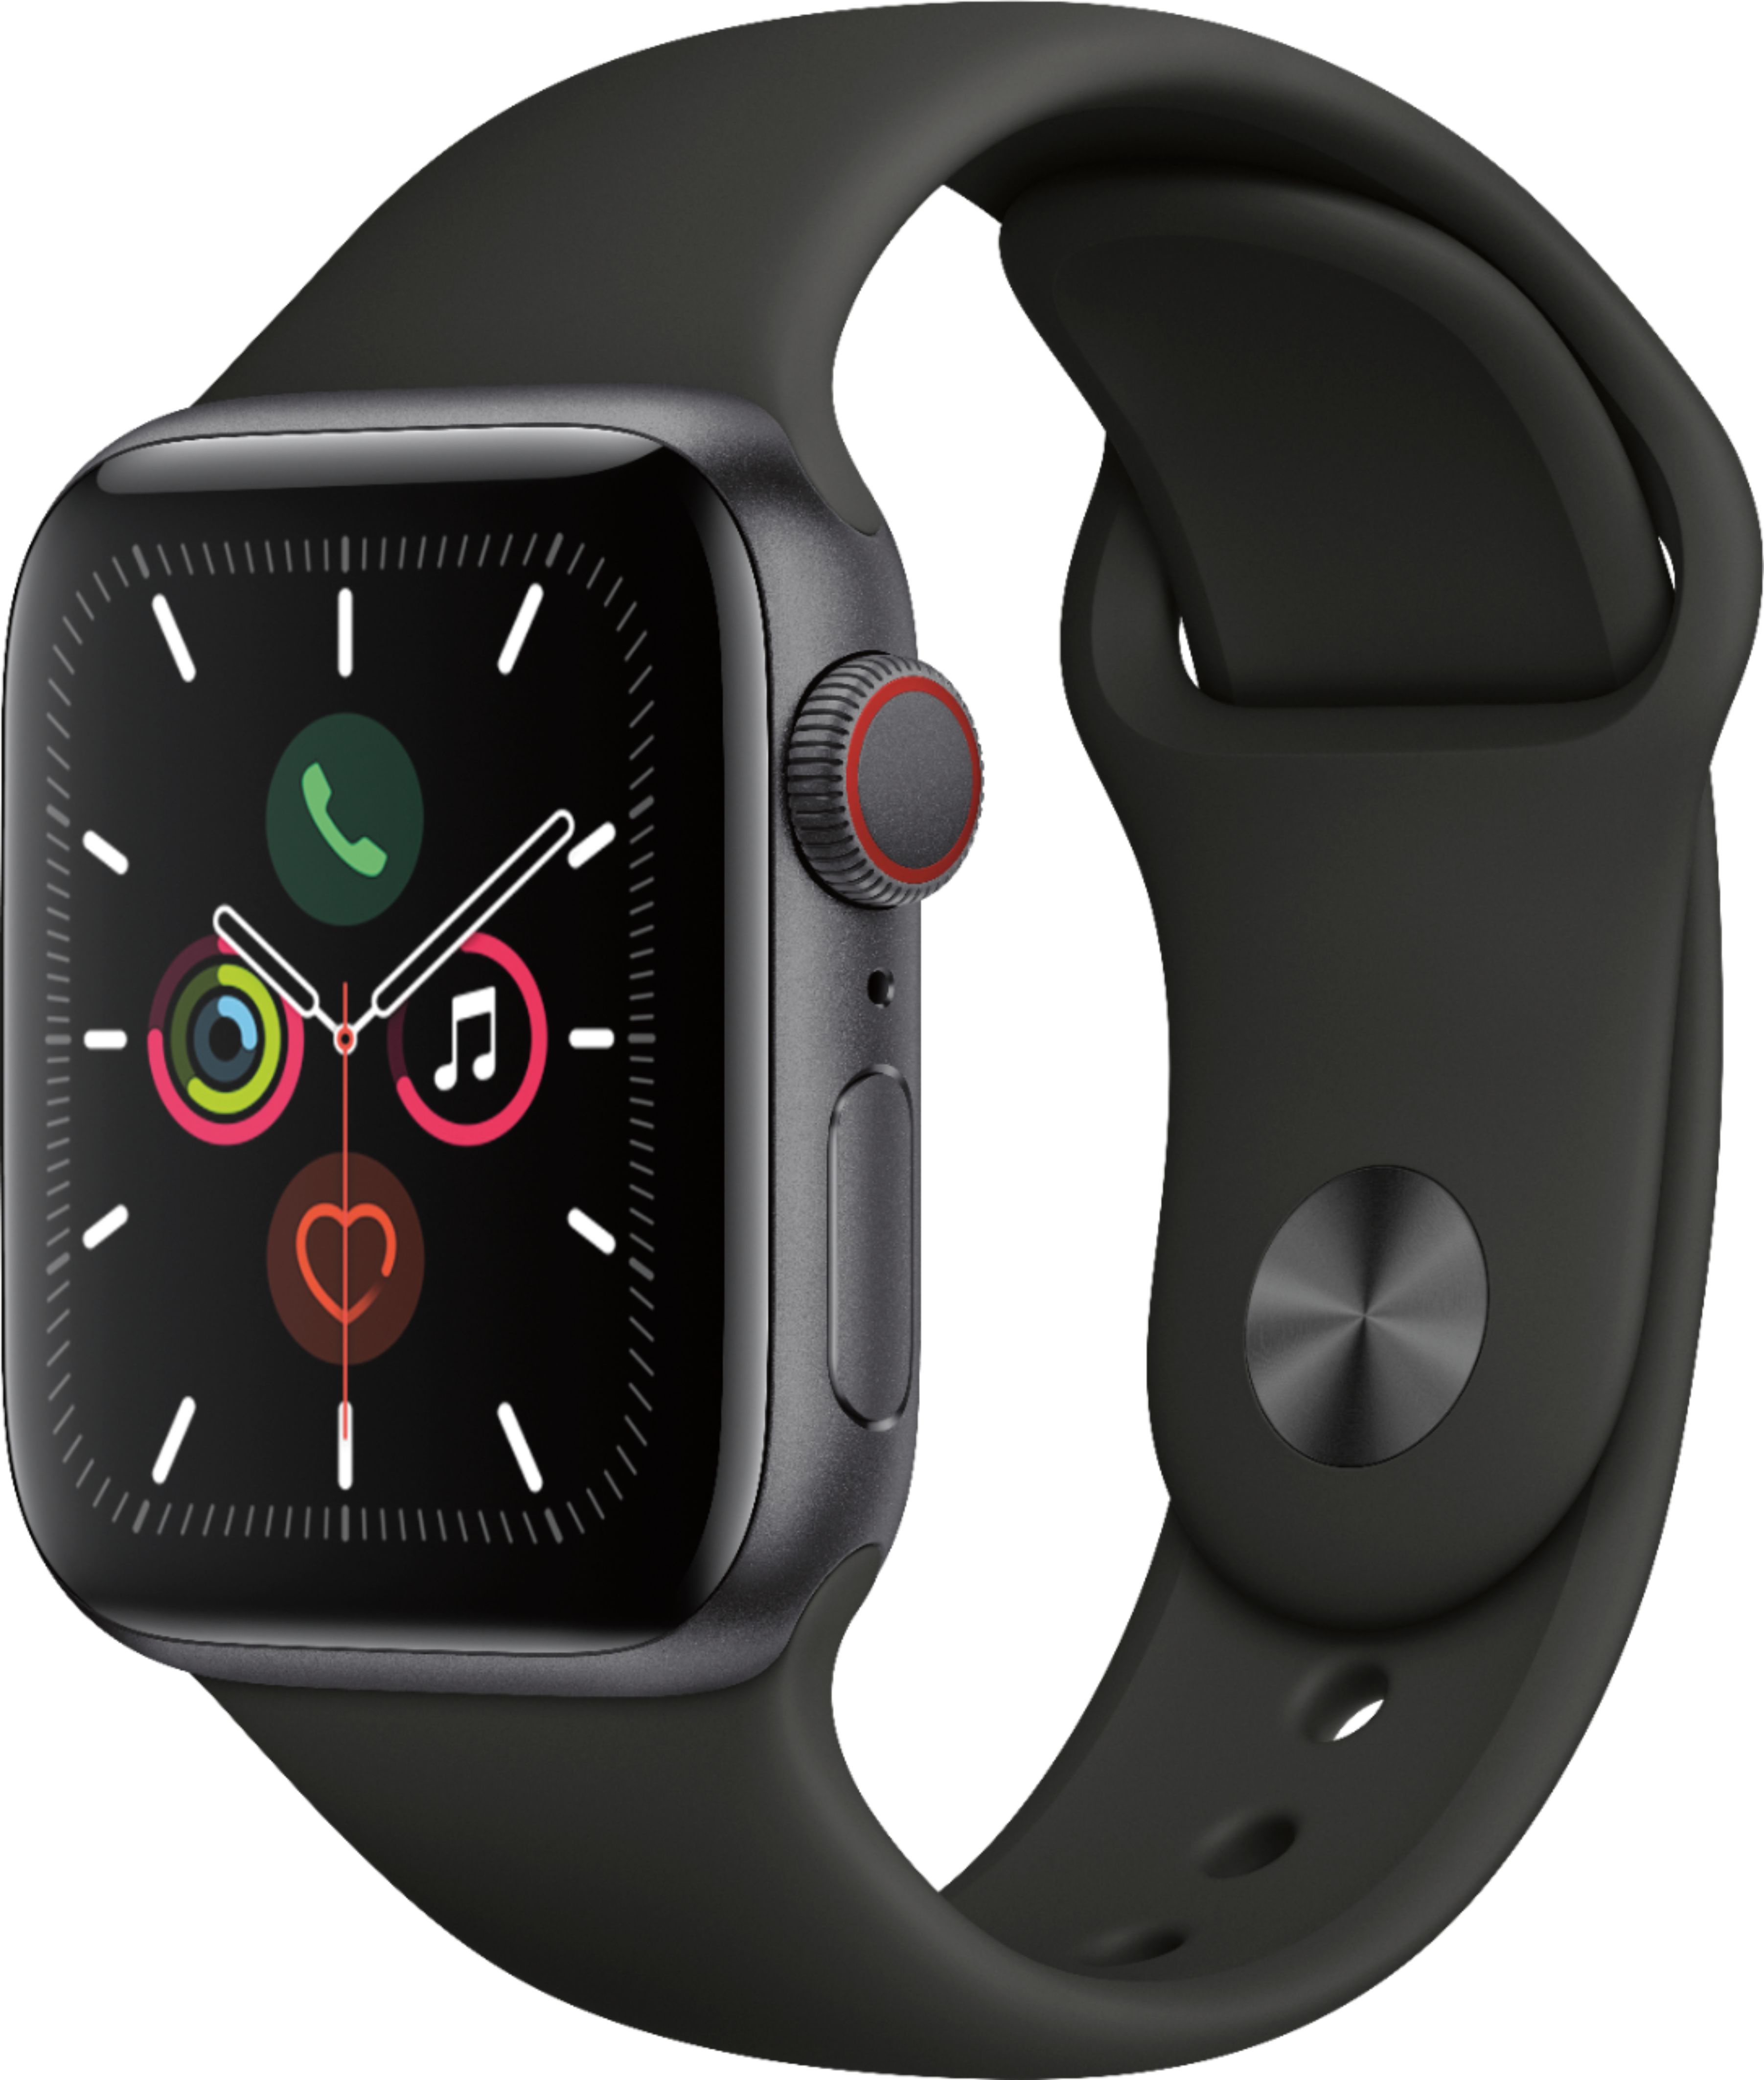 Apple Watch Series 5 (GPS + Cellular) 40mm Space Black Stainless Steel Apple Watch Series 5 Stainless Steel 40mm